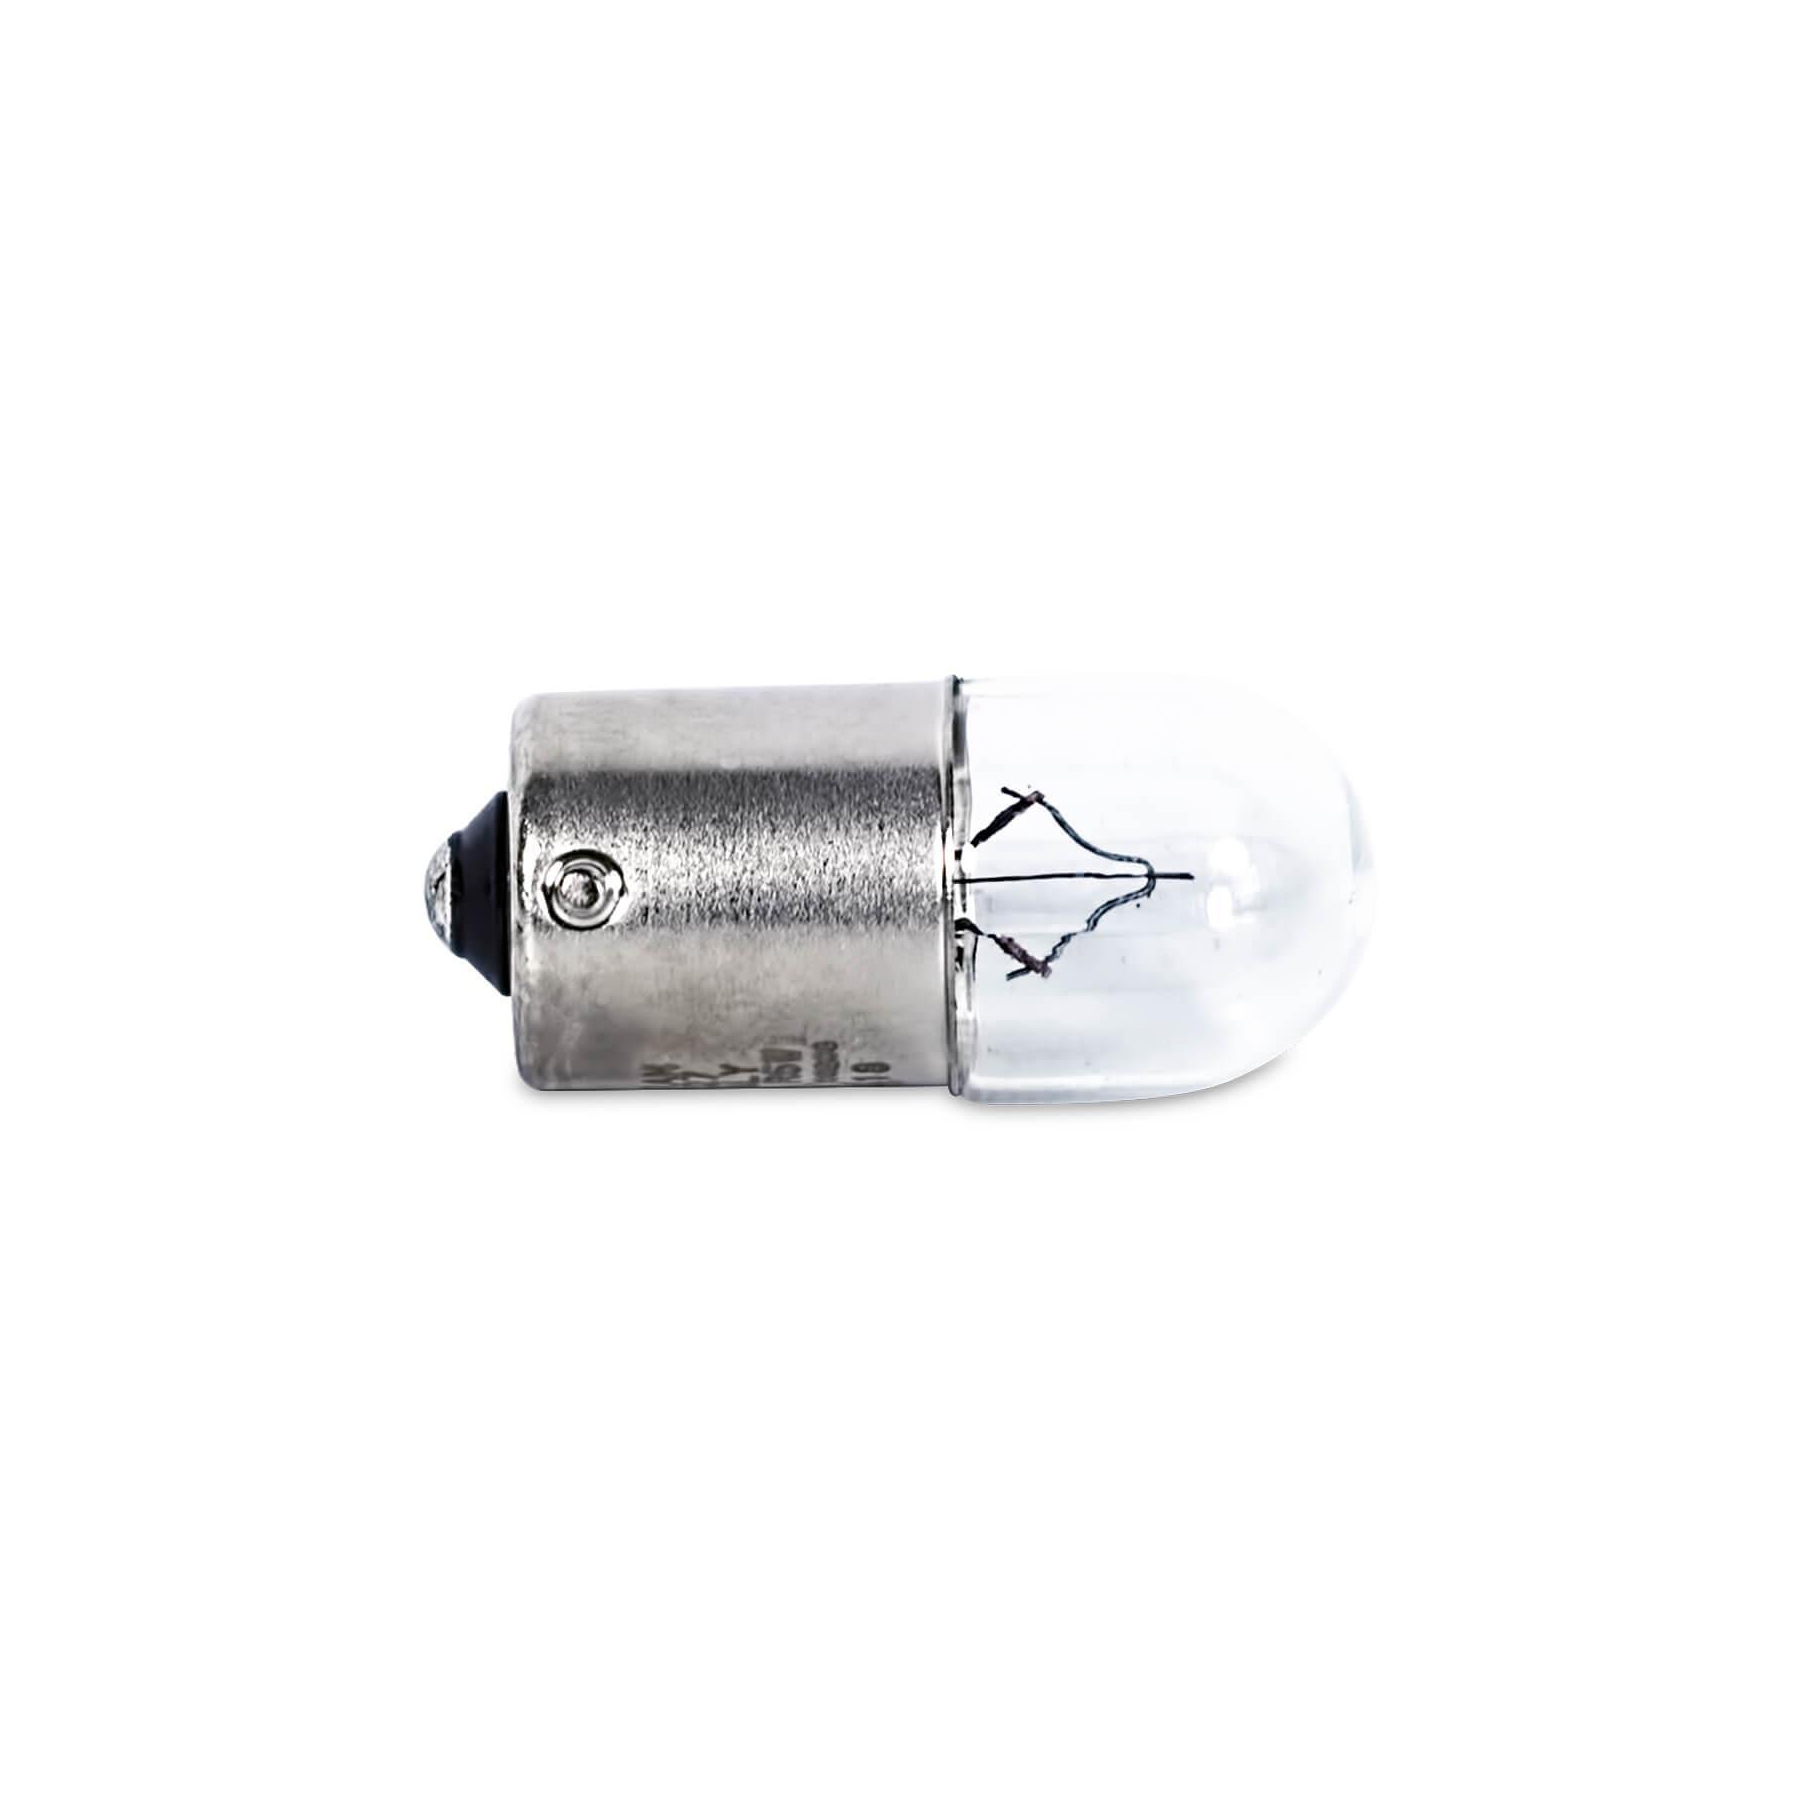 OSRAM R5W Signallampen Autolampe 5007-02B, CHF 3,95